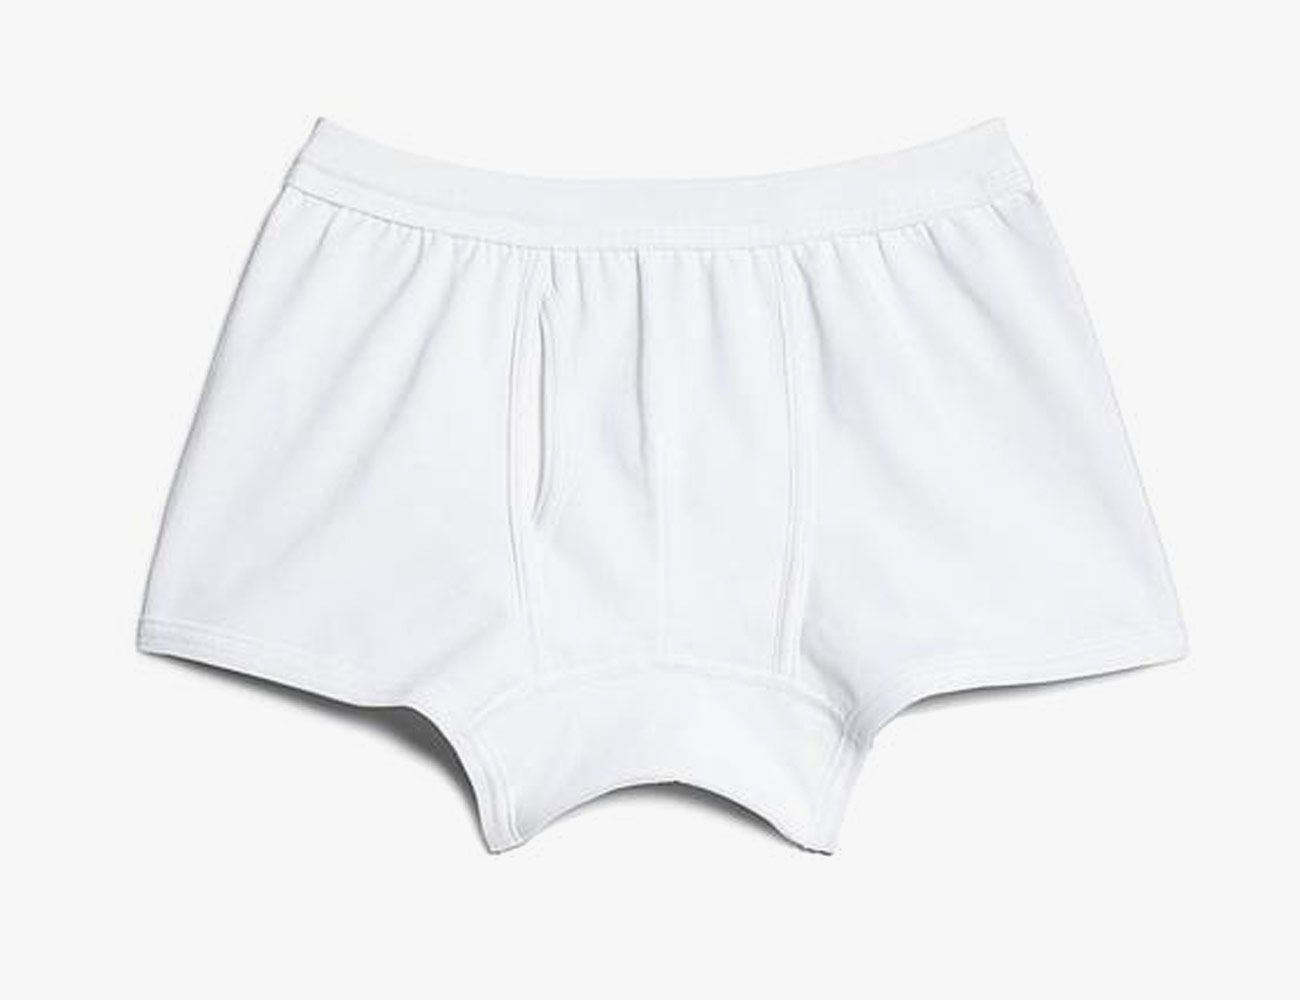 Mkuell Bradypod Sloth Comfortable Mens Boxer Briefs Multi-Size Soft Underwear S 